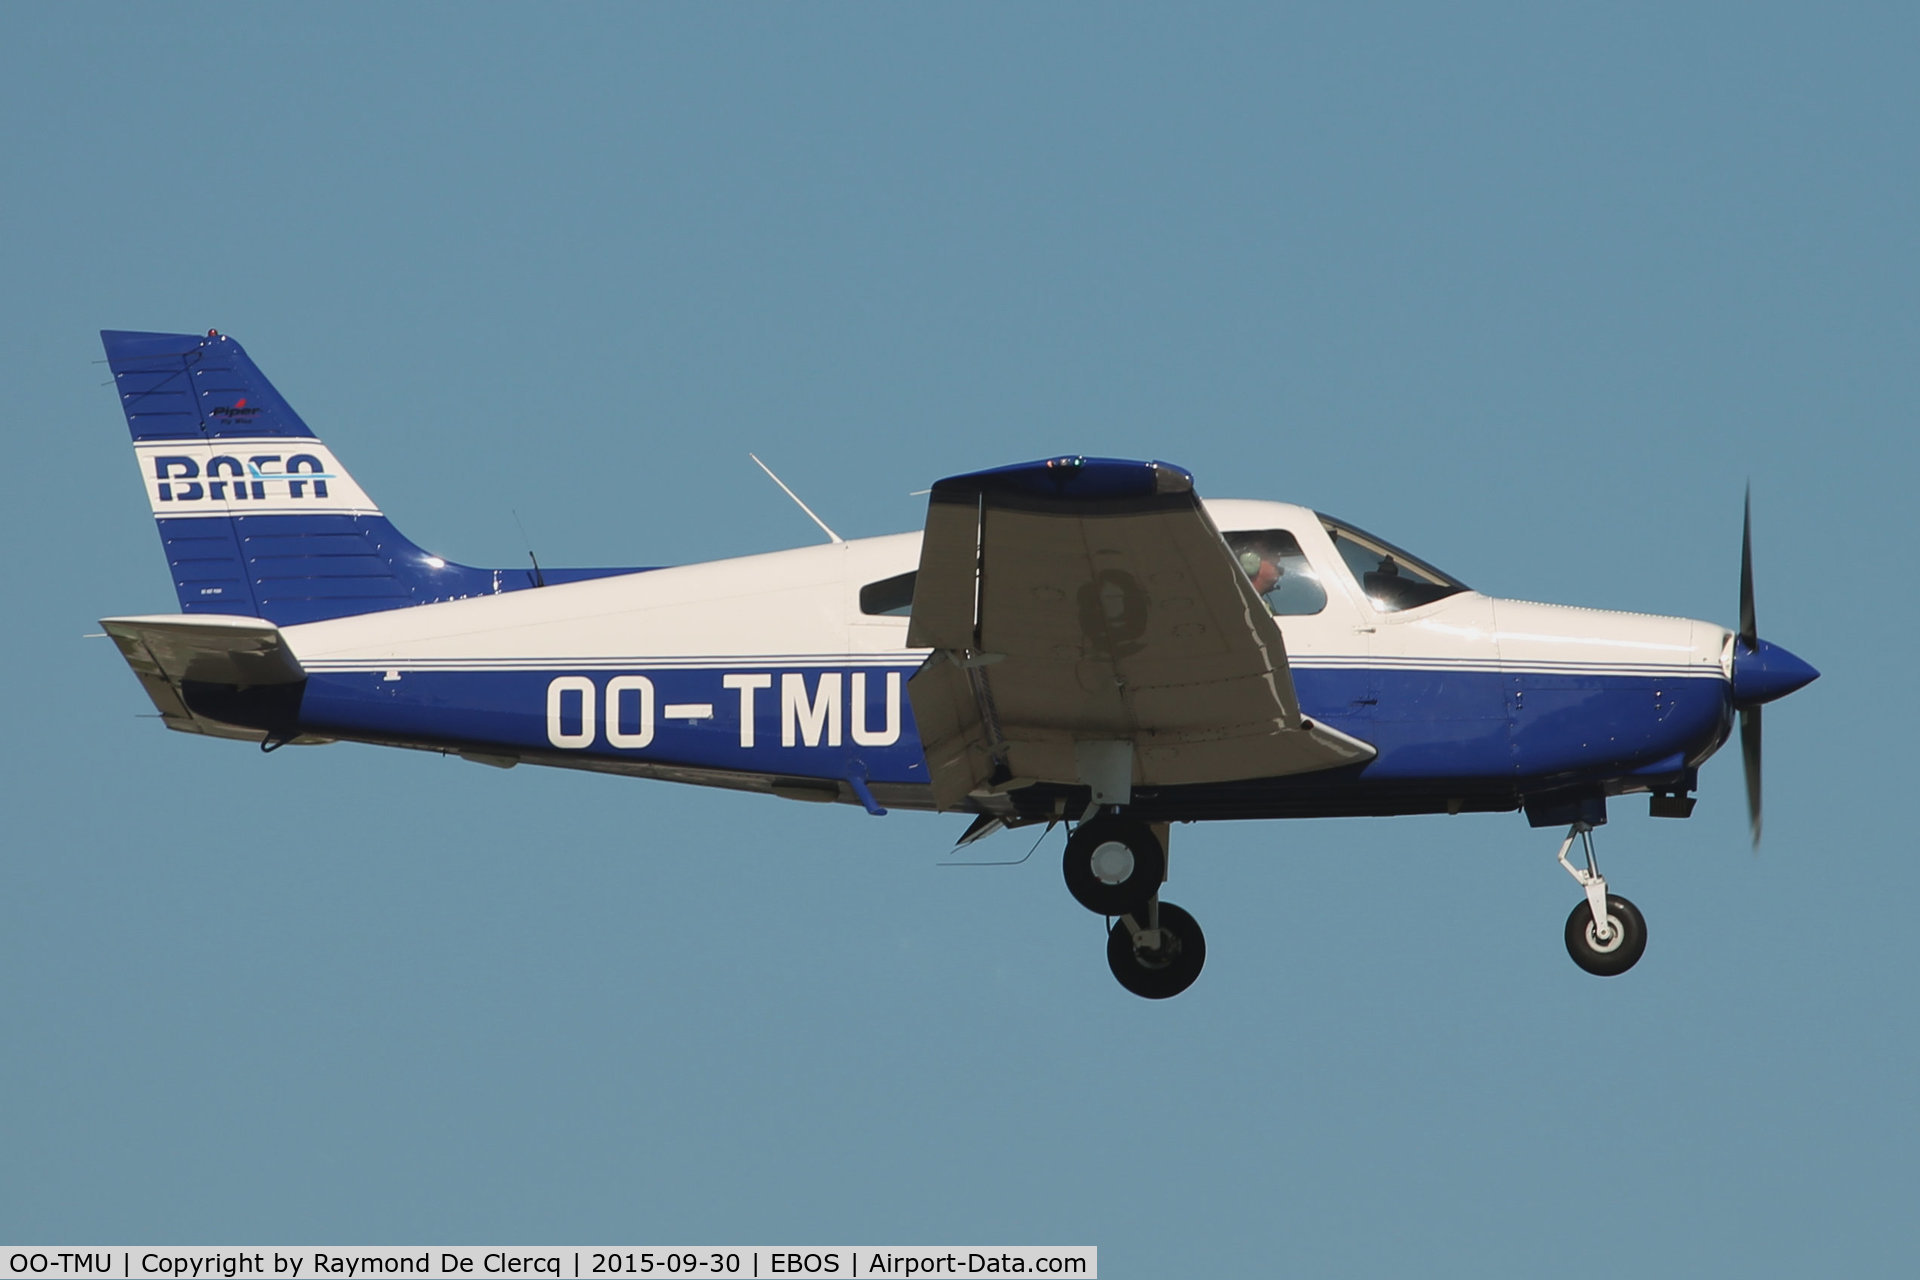 OO-TMU, 2010 Piper PA-28-161 Warrior III C/N 2842343, OO-TMU of BAFA (Ben Air Flight Academy) landing at Ostend.